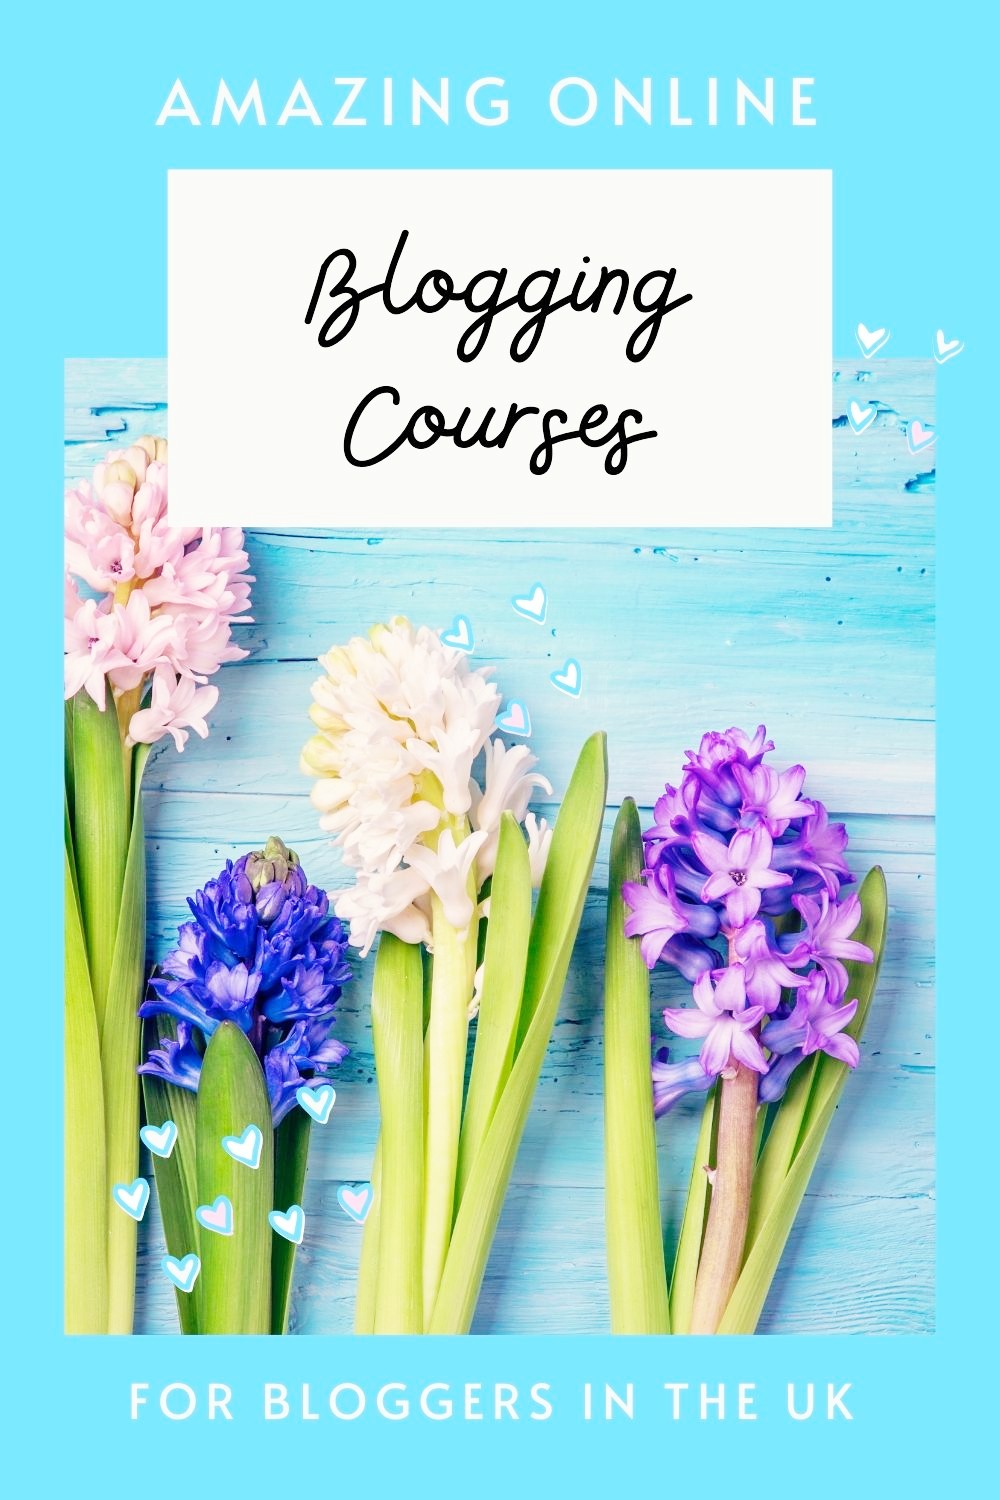 <img src="amazing.jpg" alt="amazing online blogging courses for bloggers"/> 